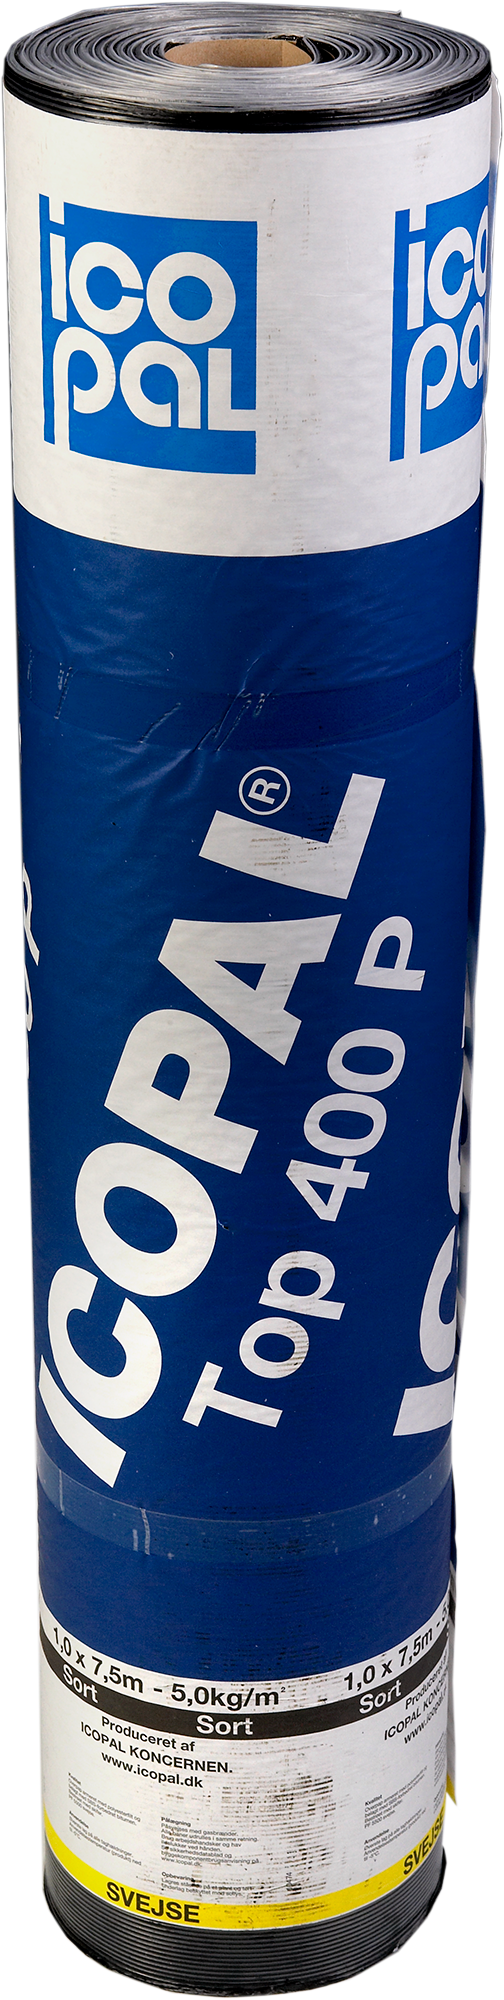 Icopal Top 400 P 0,60x7,5m - 20 Rl Pr Palle